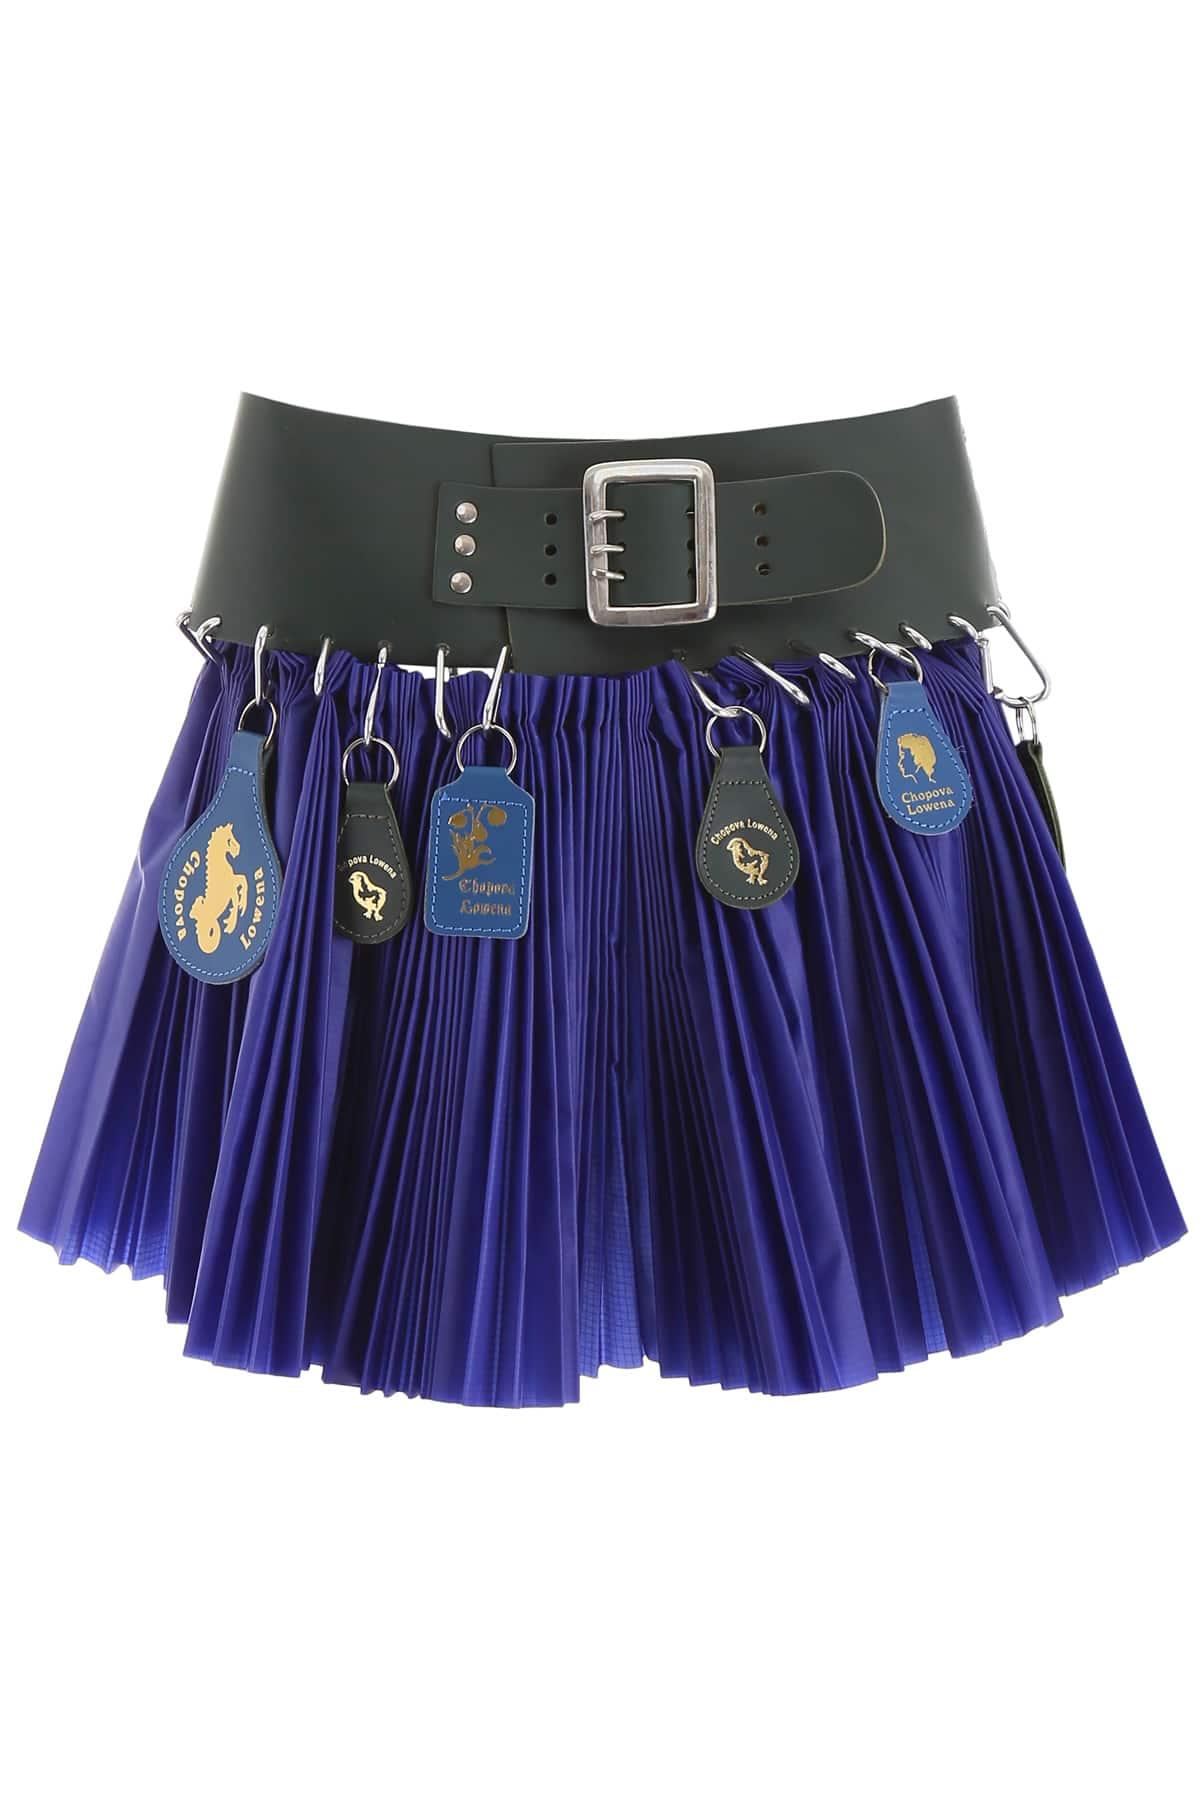 Chopova Lowena Synthetic Pleated Nylon Mini Skirt in Blue - Save 30% - Lyst